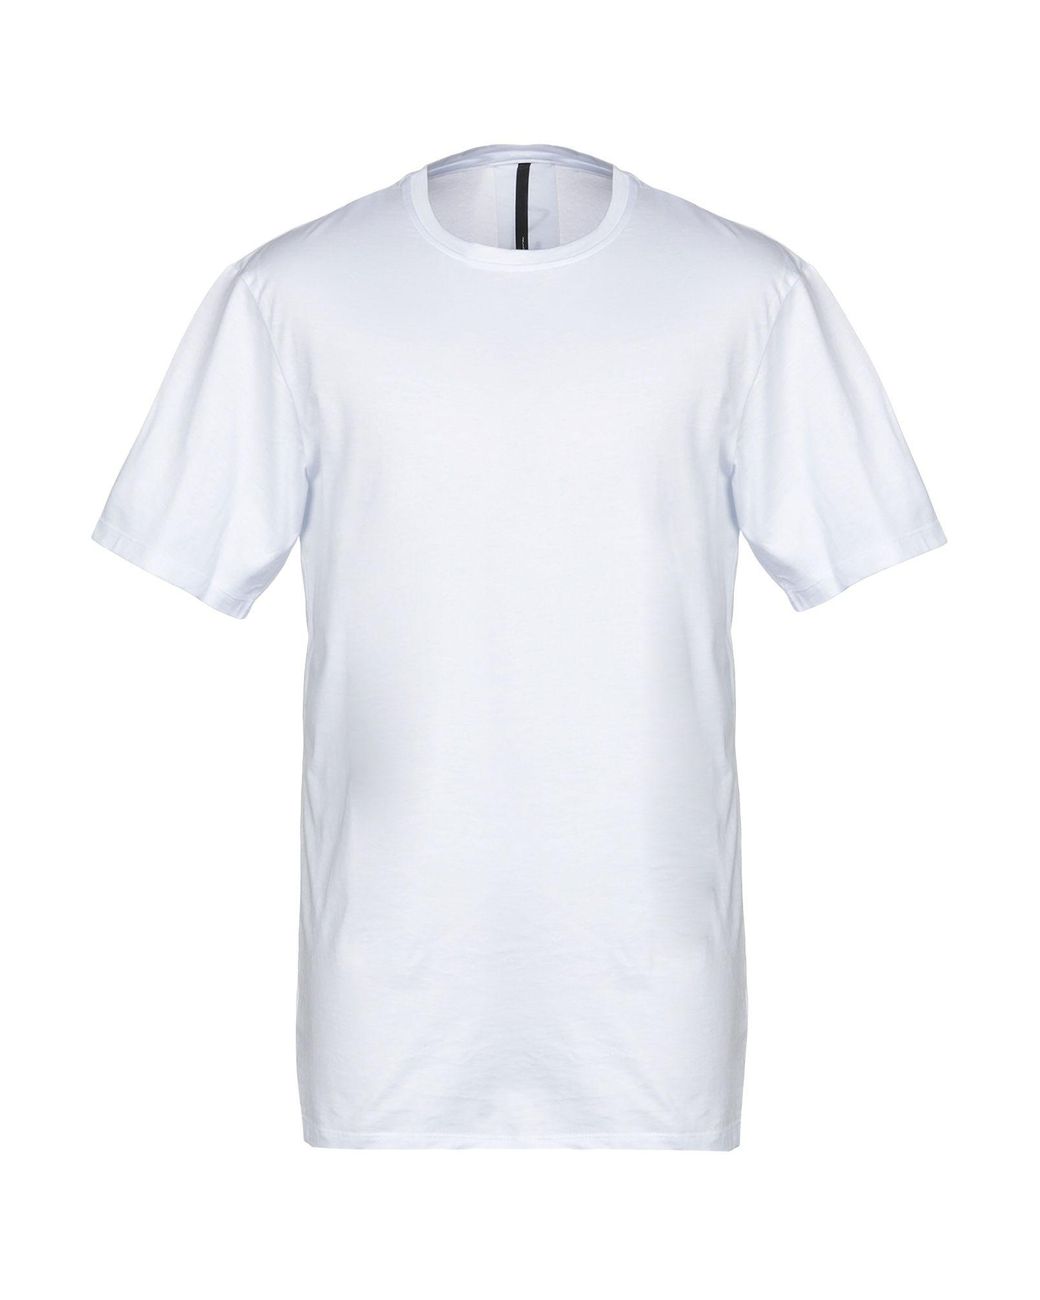 Takeshy Kurosawa Cotton T-shirt in White for Men - Lyst